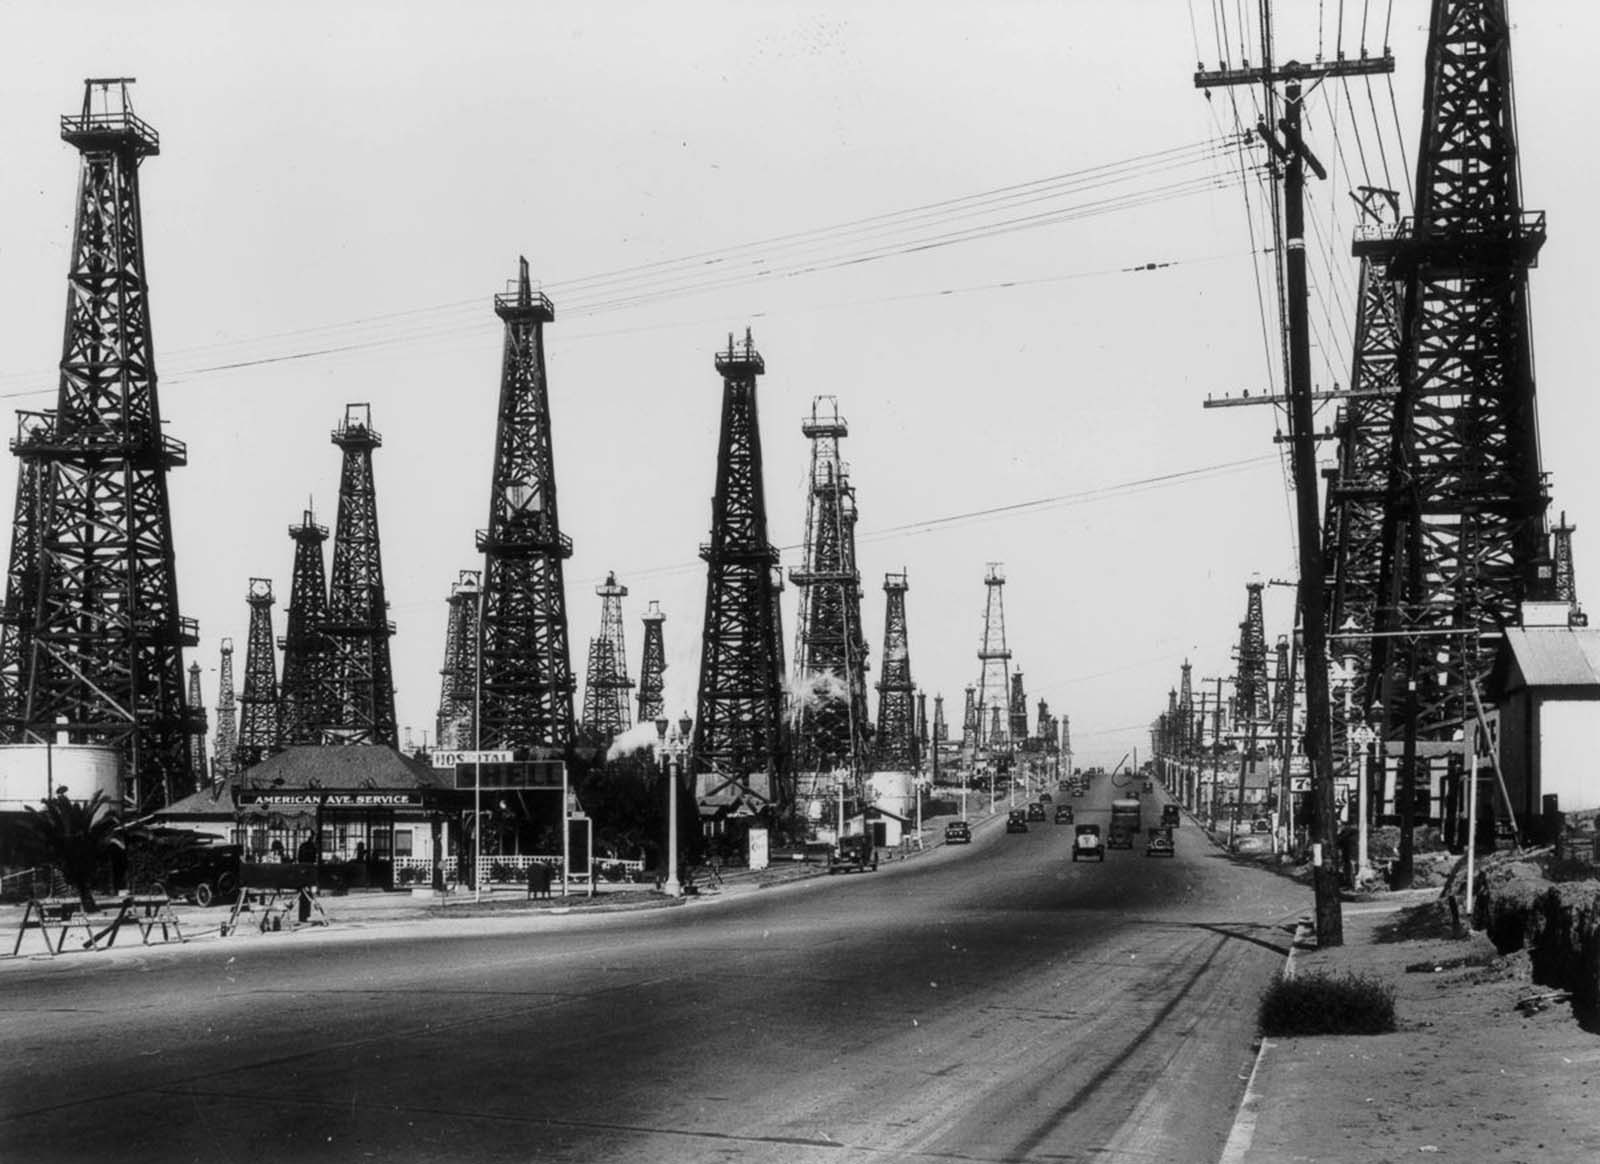 Oil derricks line a road outside Los Angeles, 1930